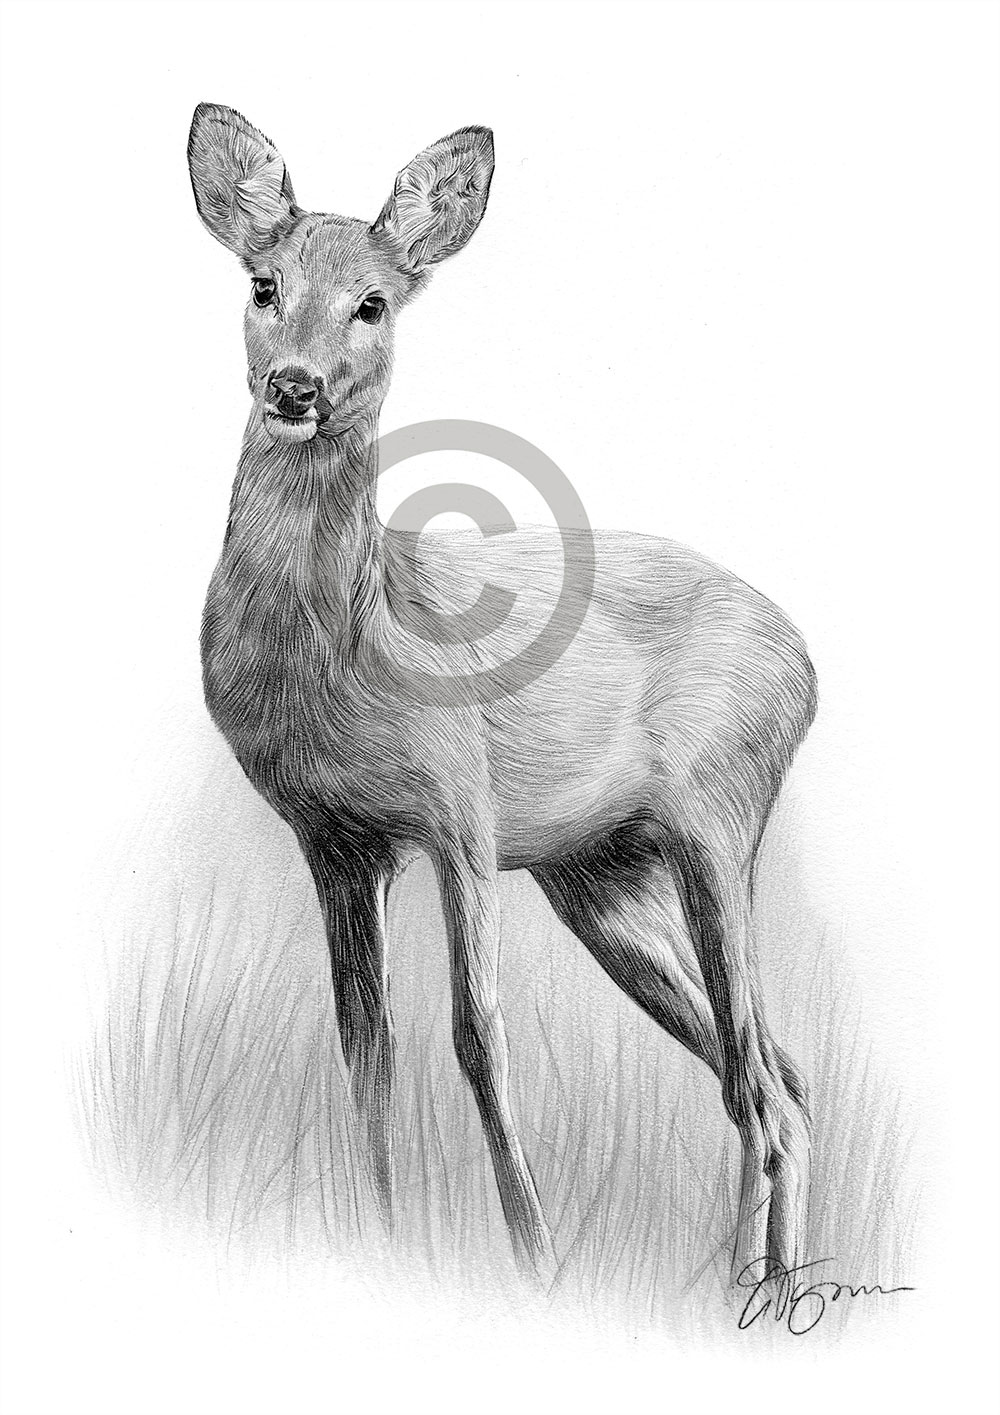 Pencil drawing of a roe deer by UK artist Gary Tymon